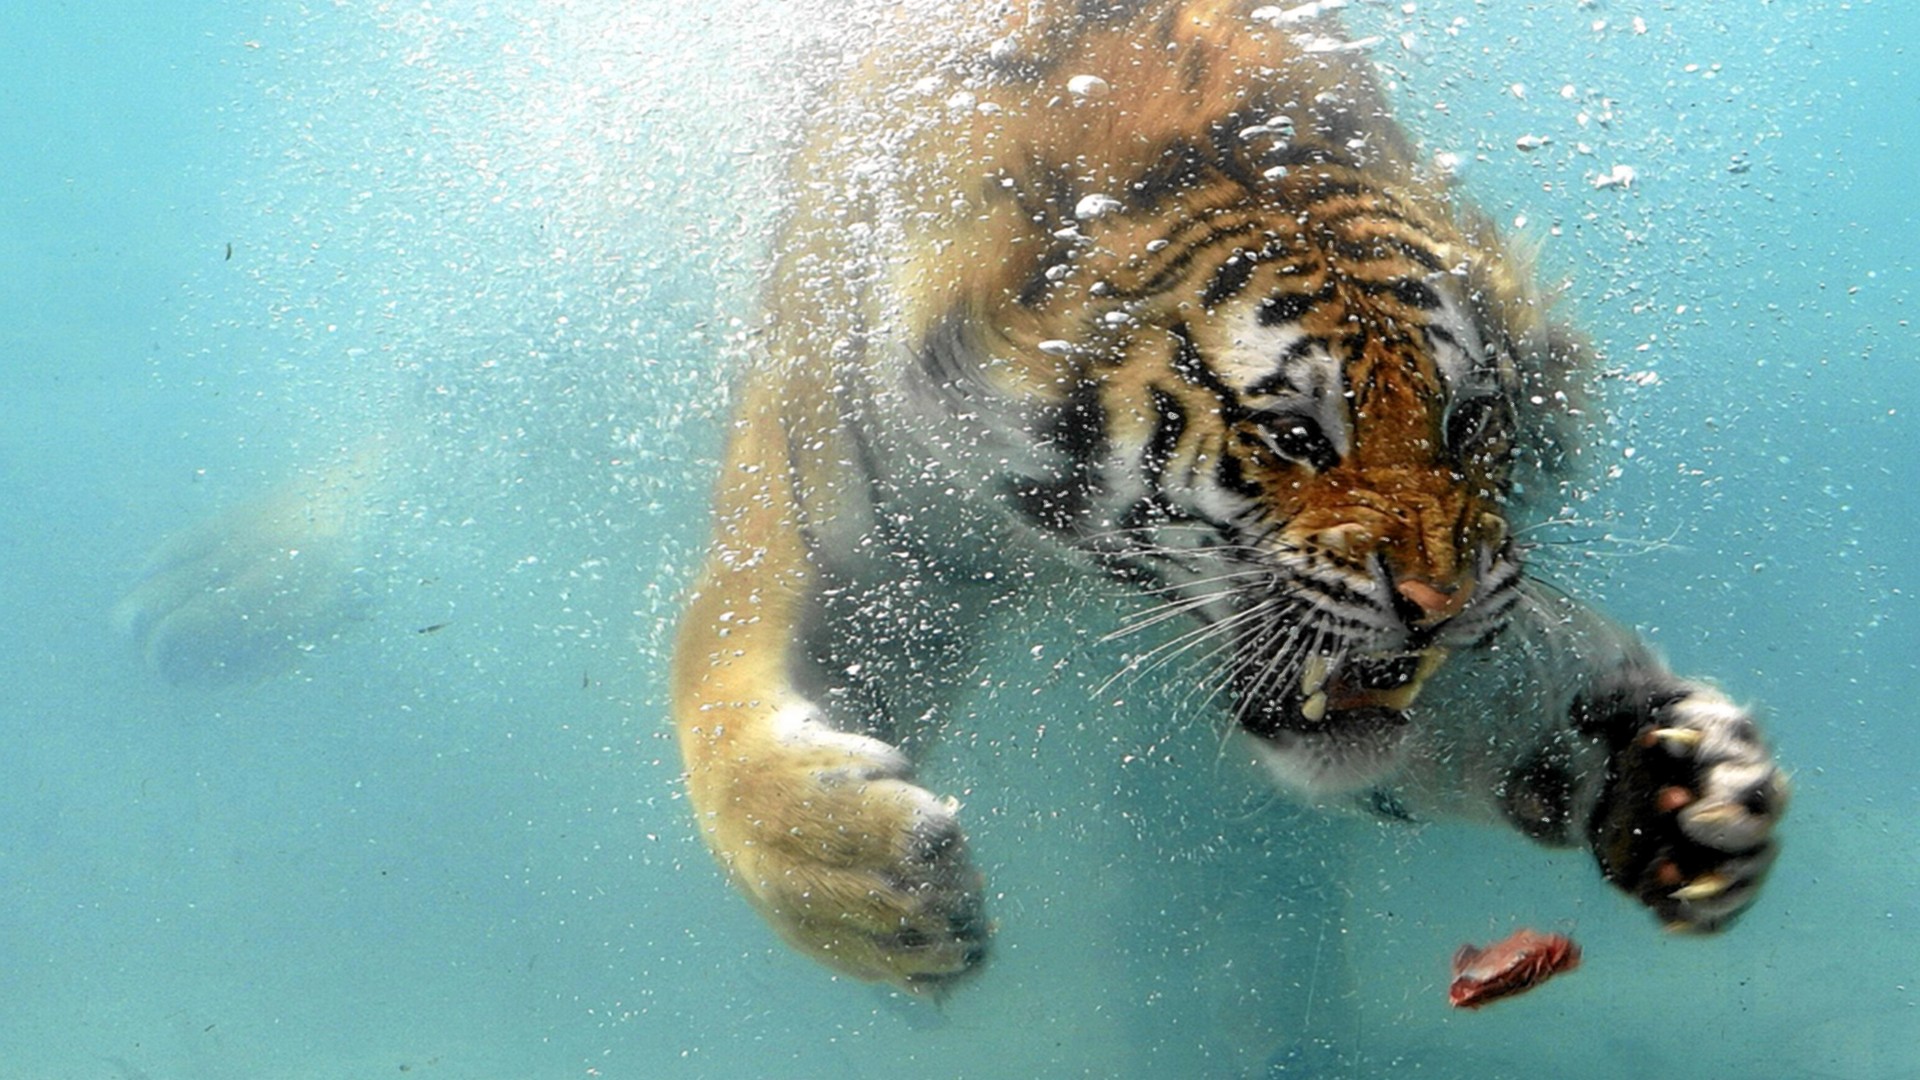 General 1920x1080 animals nature tiger underwater bubbles meat mammals feline big cats